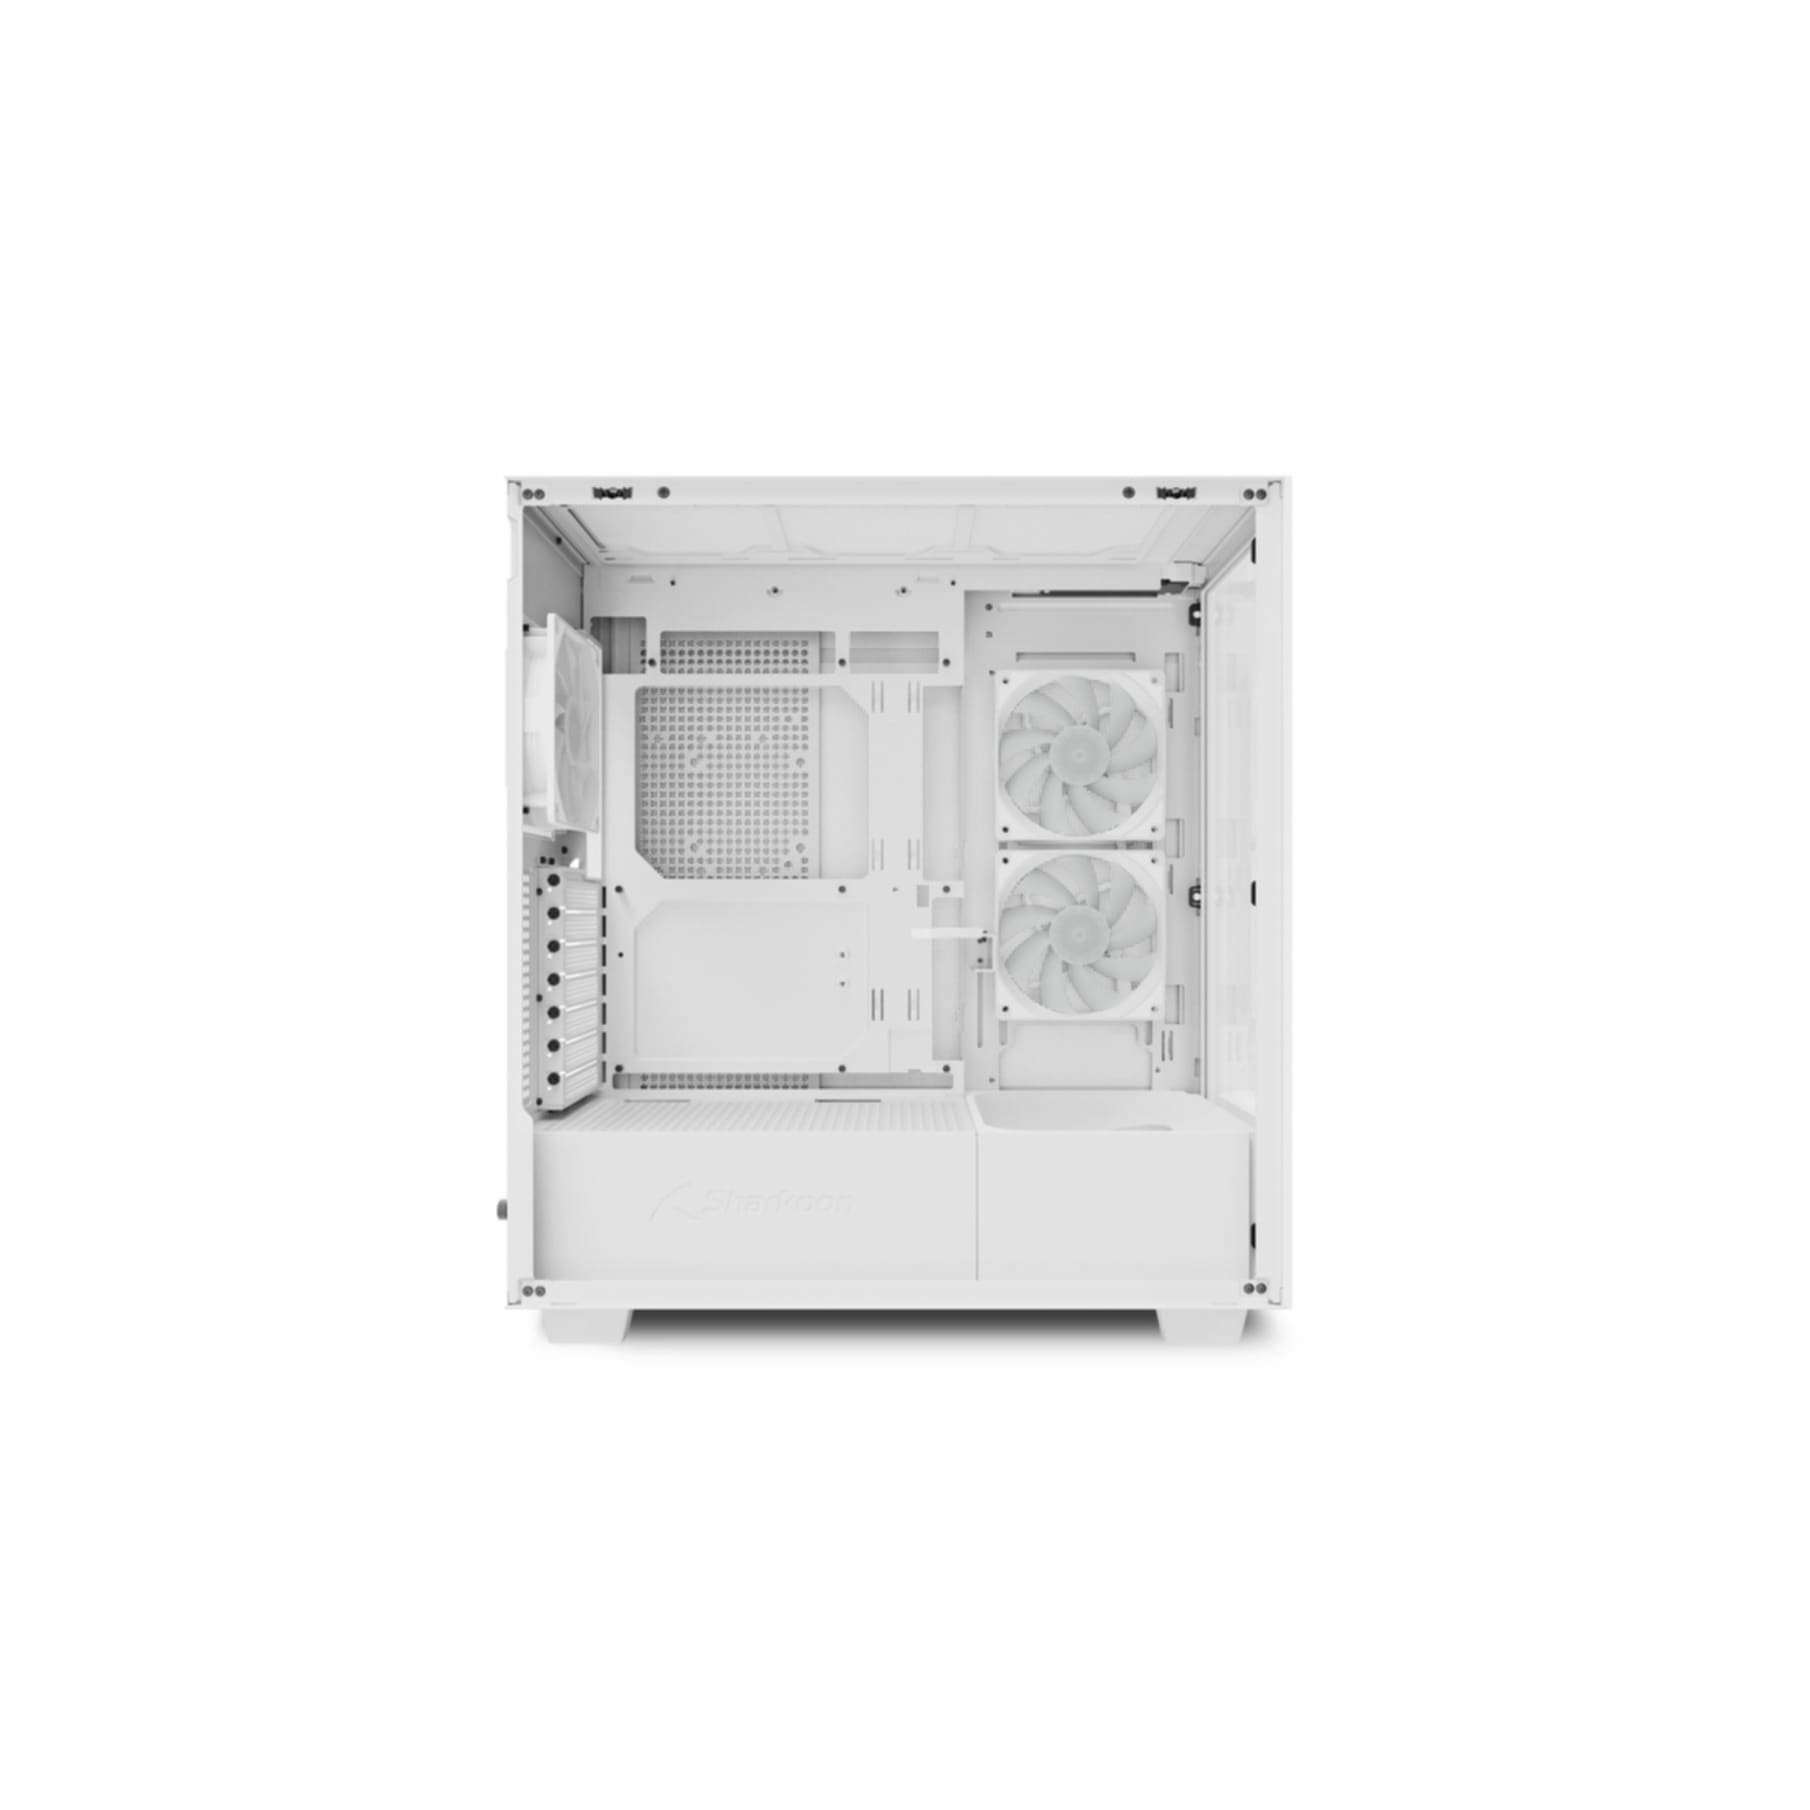 Sharkoon PC-Gehäuse »Rebel C60 RGB White«